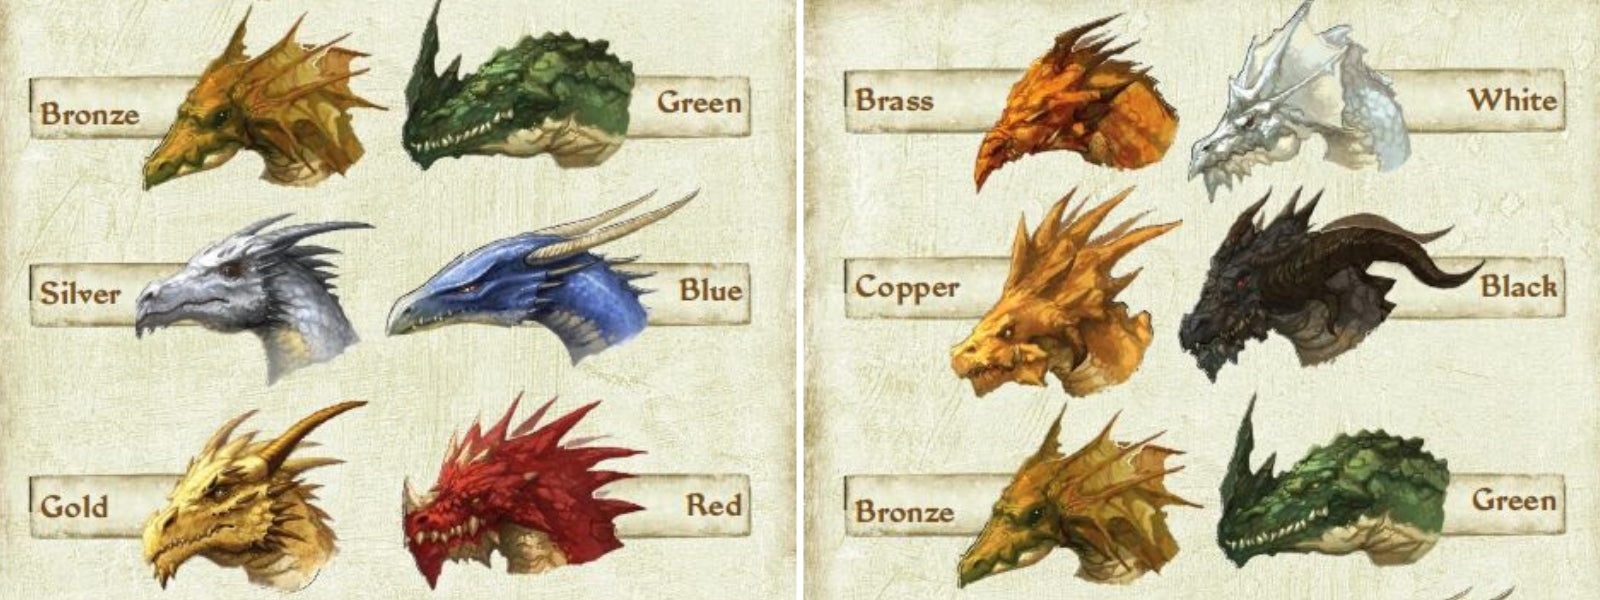 signification couleurs dragon